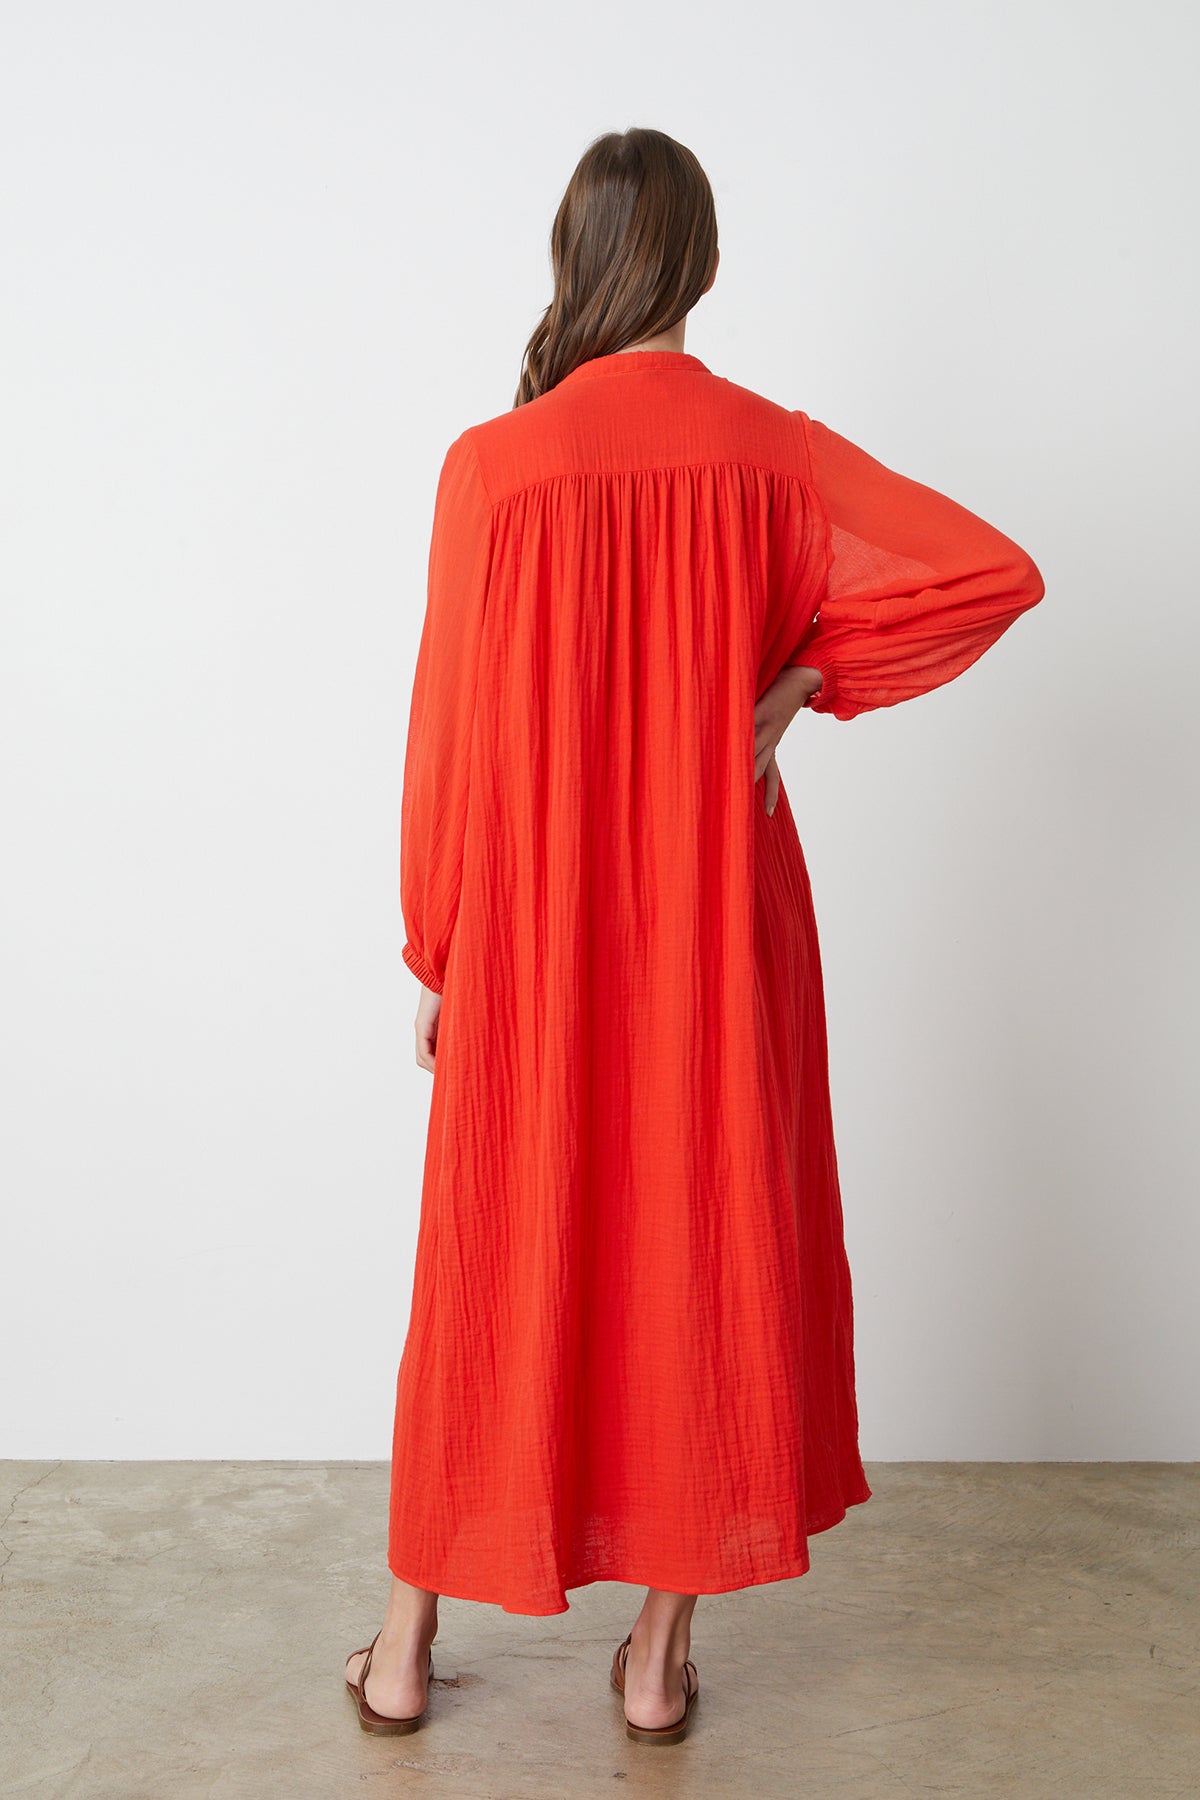   Carmella Maxi Dress in bright red cardinal color gauze full length back 